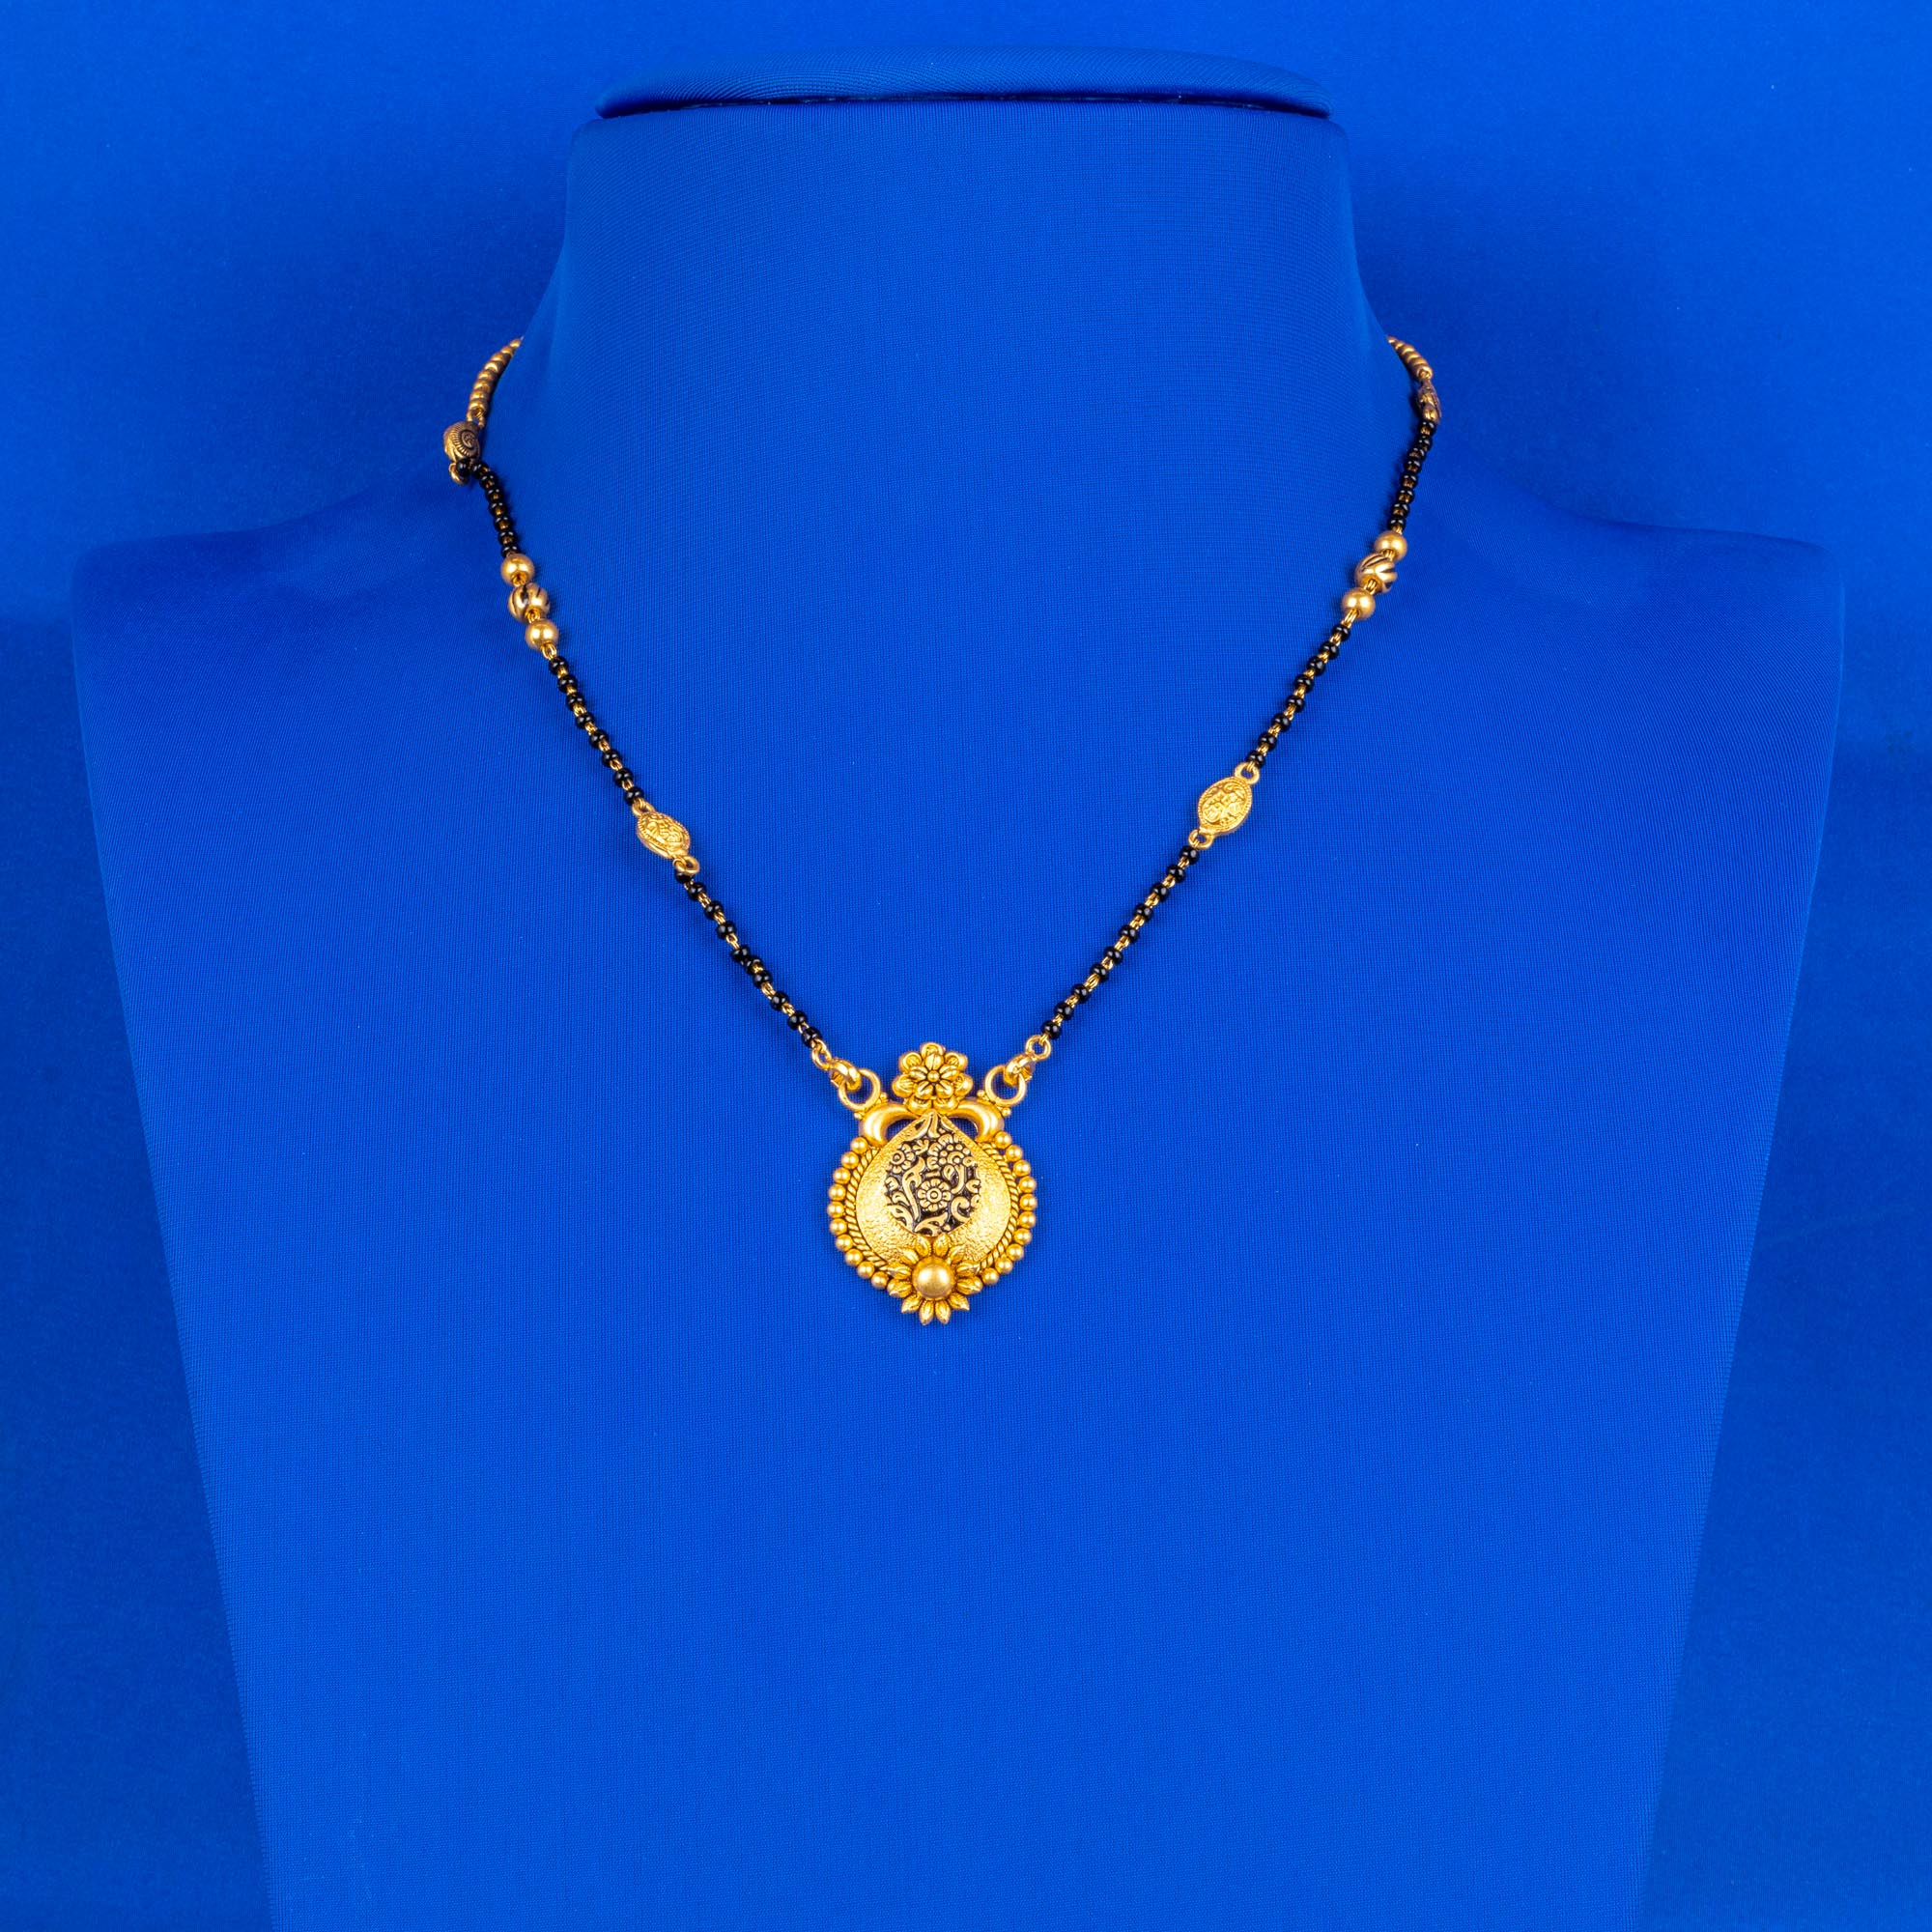 22K Gold 'Antique' Mangalsutra Necklace